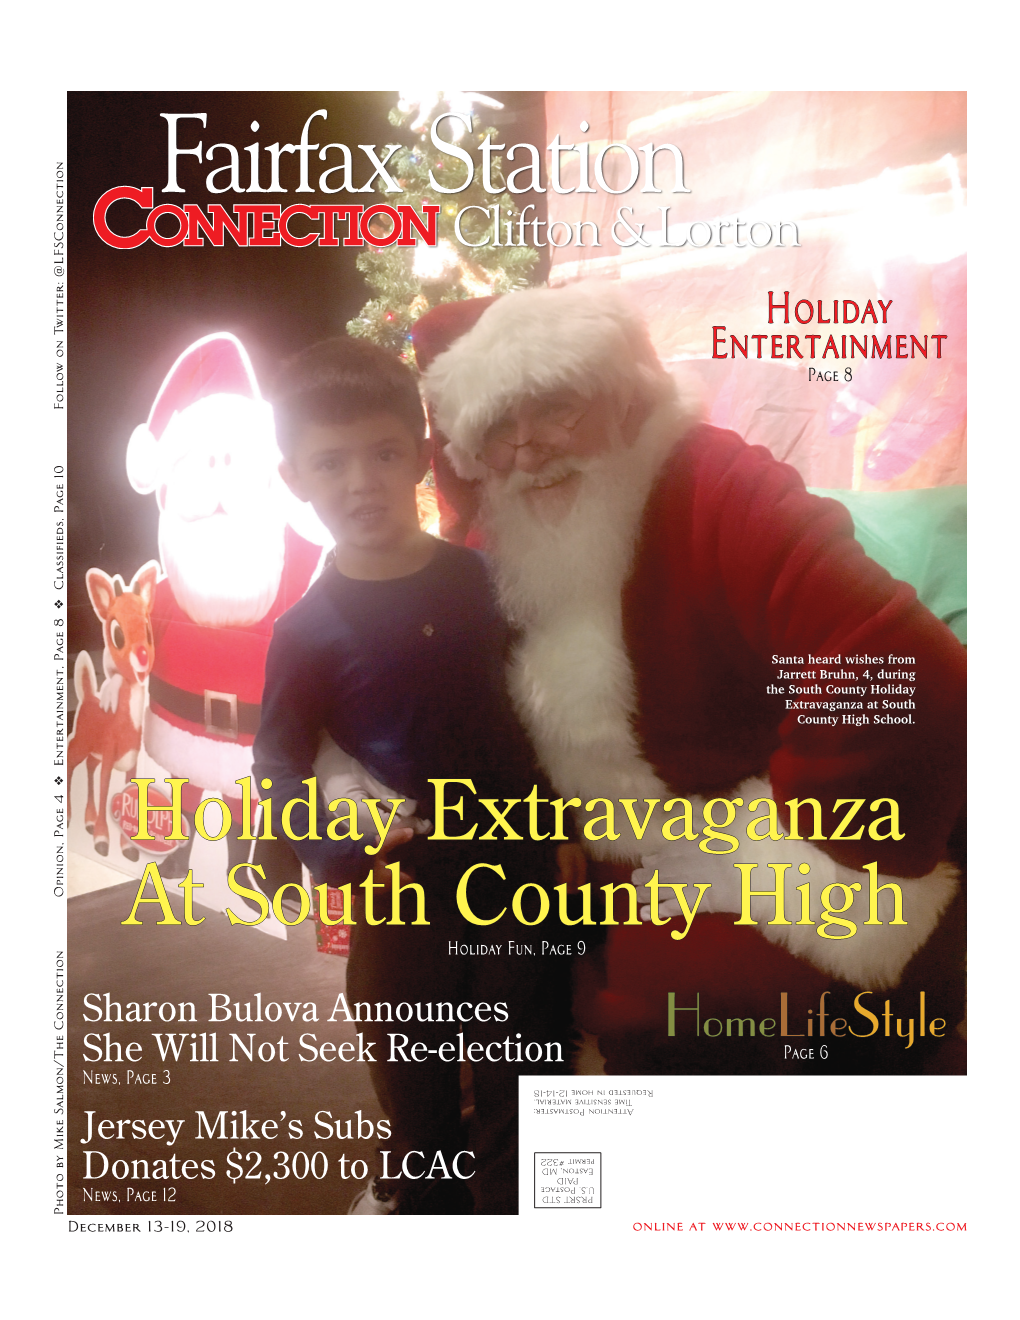 Holiday Extravaganza at South County High School